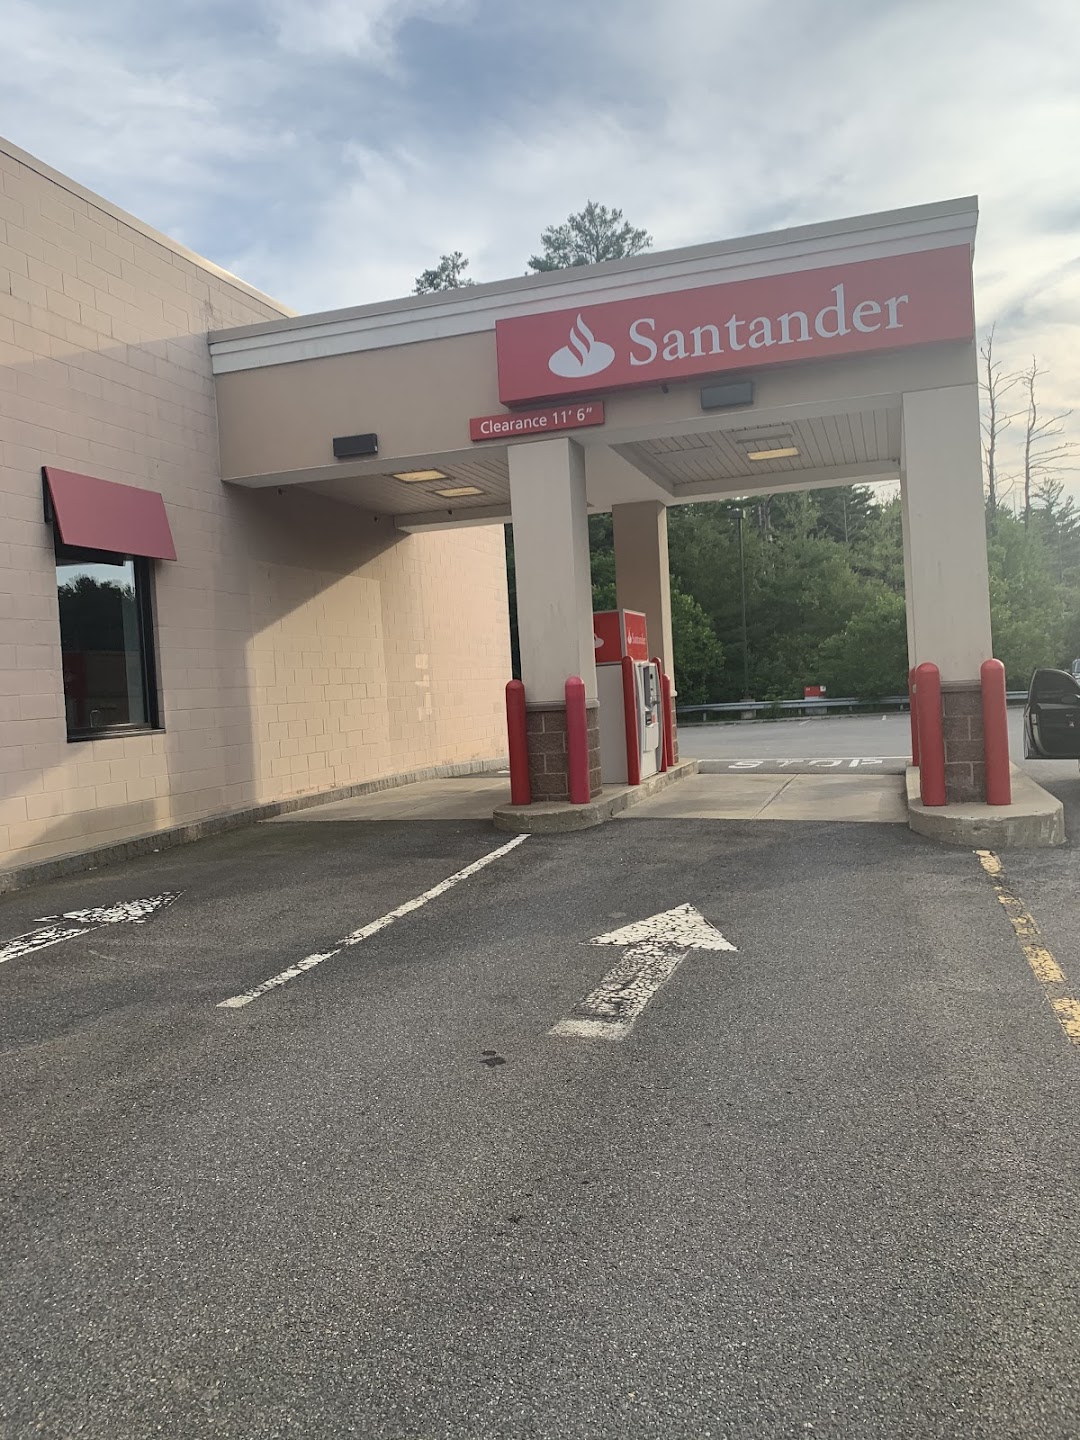 Santander Bank ATM